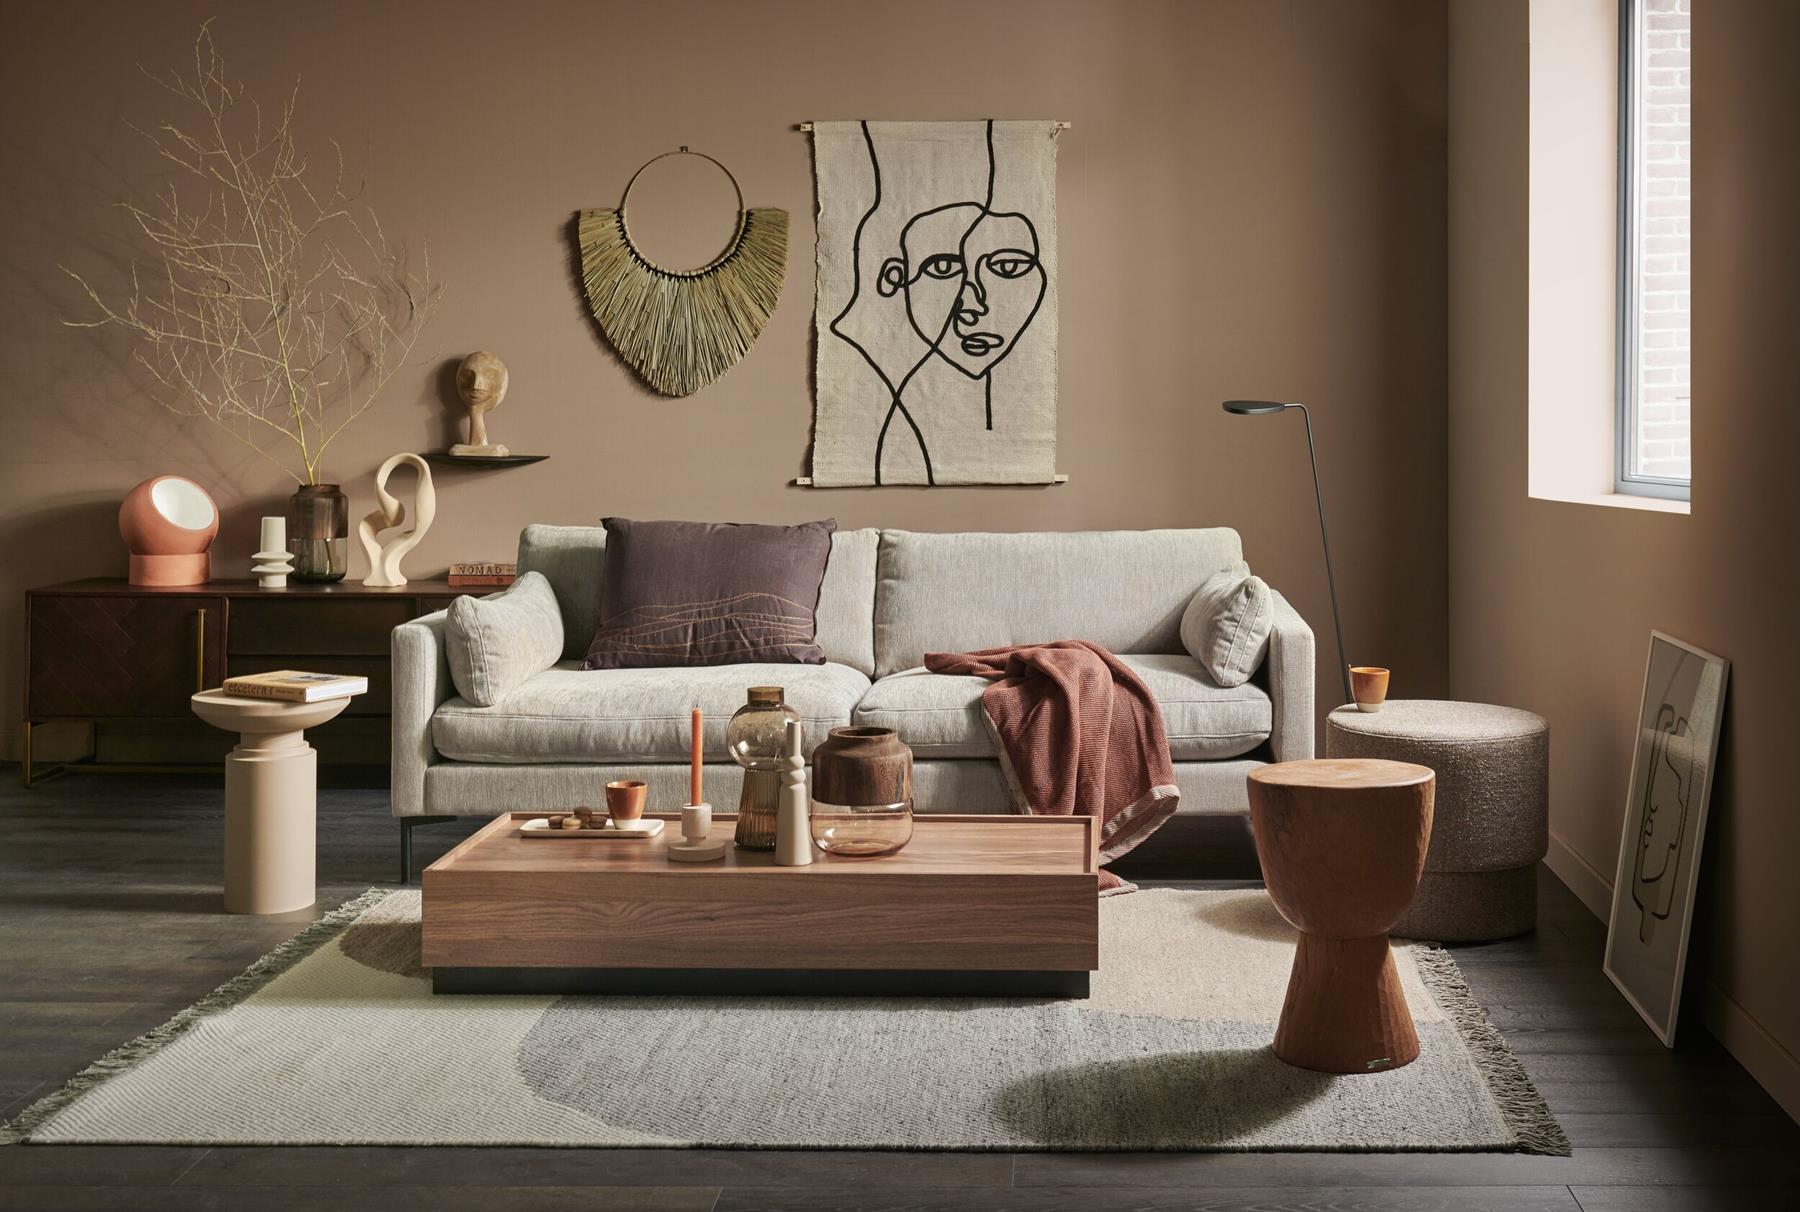 Goedkeuring merknaam Verstrooien Shop de look: down to earth woonkamer in trendkleur bruin